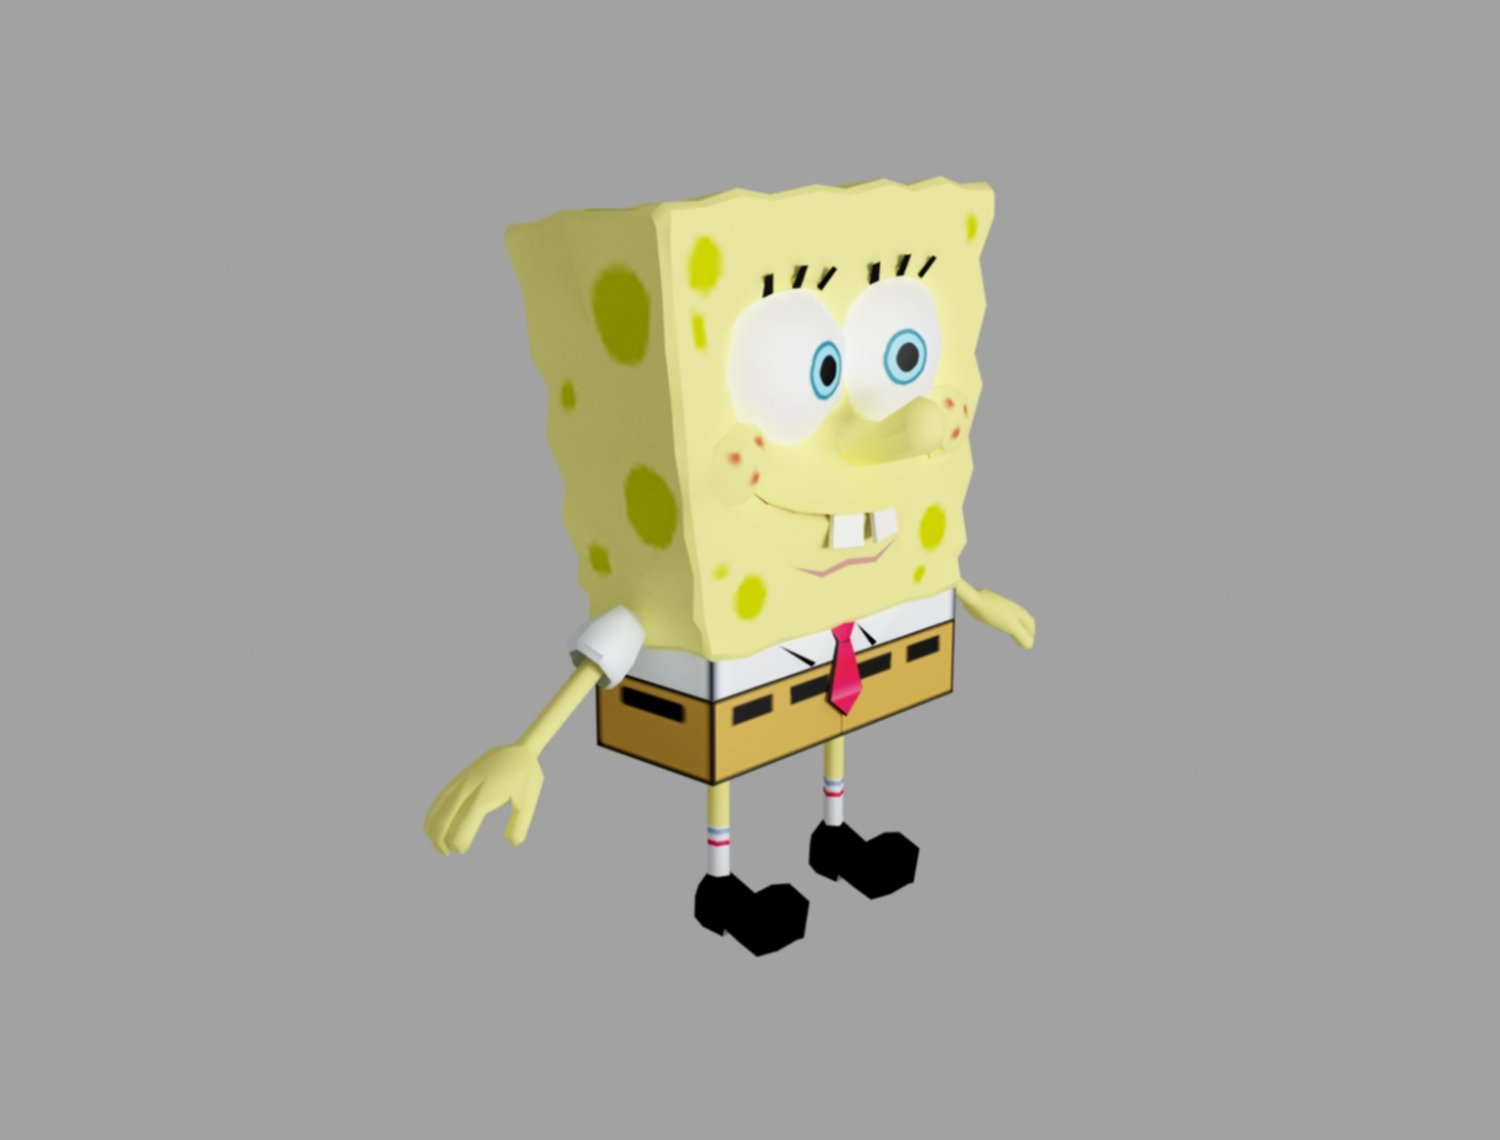 Karakter. spongebob squarepants Model 3D. 